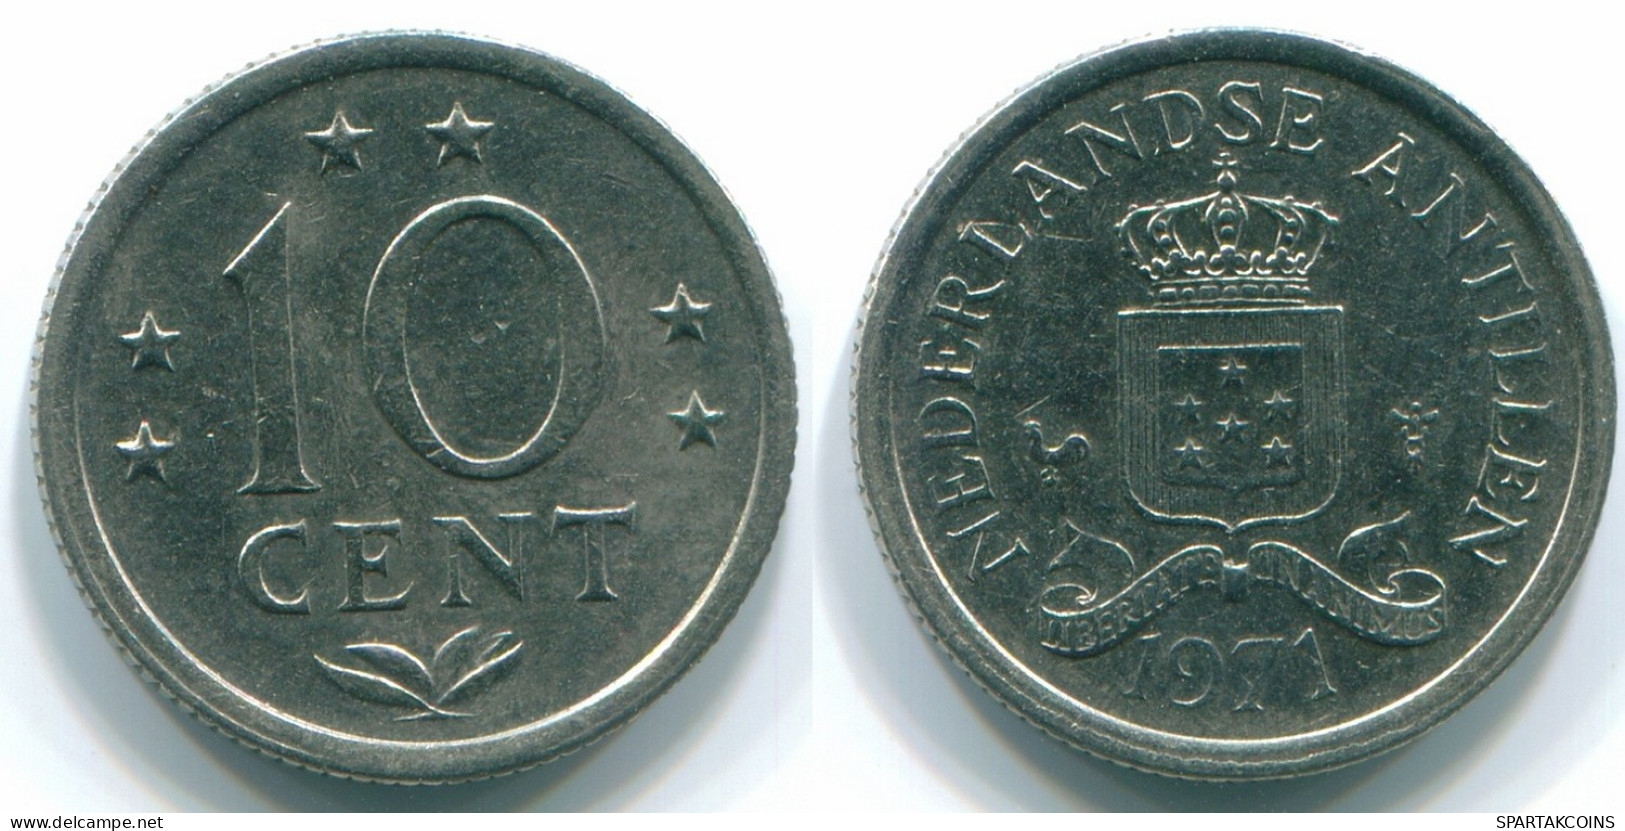 10 CENTS 1971 NIEDERLÄNDISCHE ANTILLEN Nickel Koloniale Münze #S13420.D.A - Netherlands Antilles